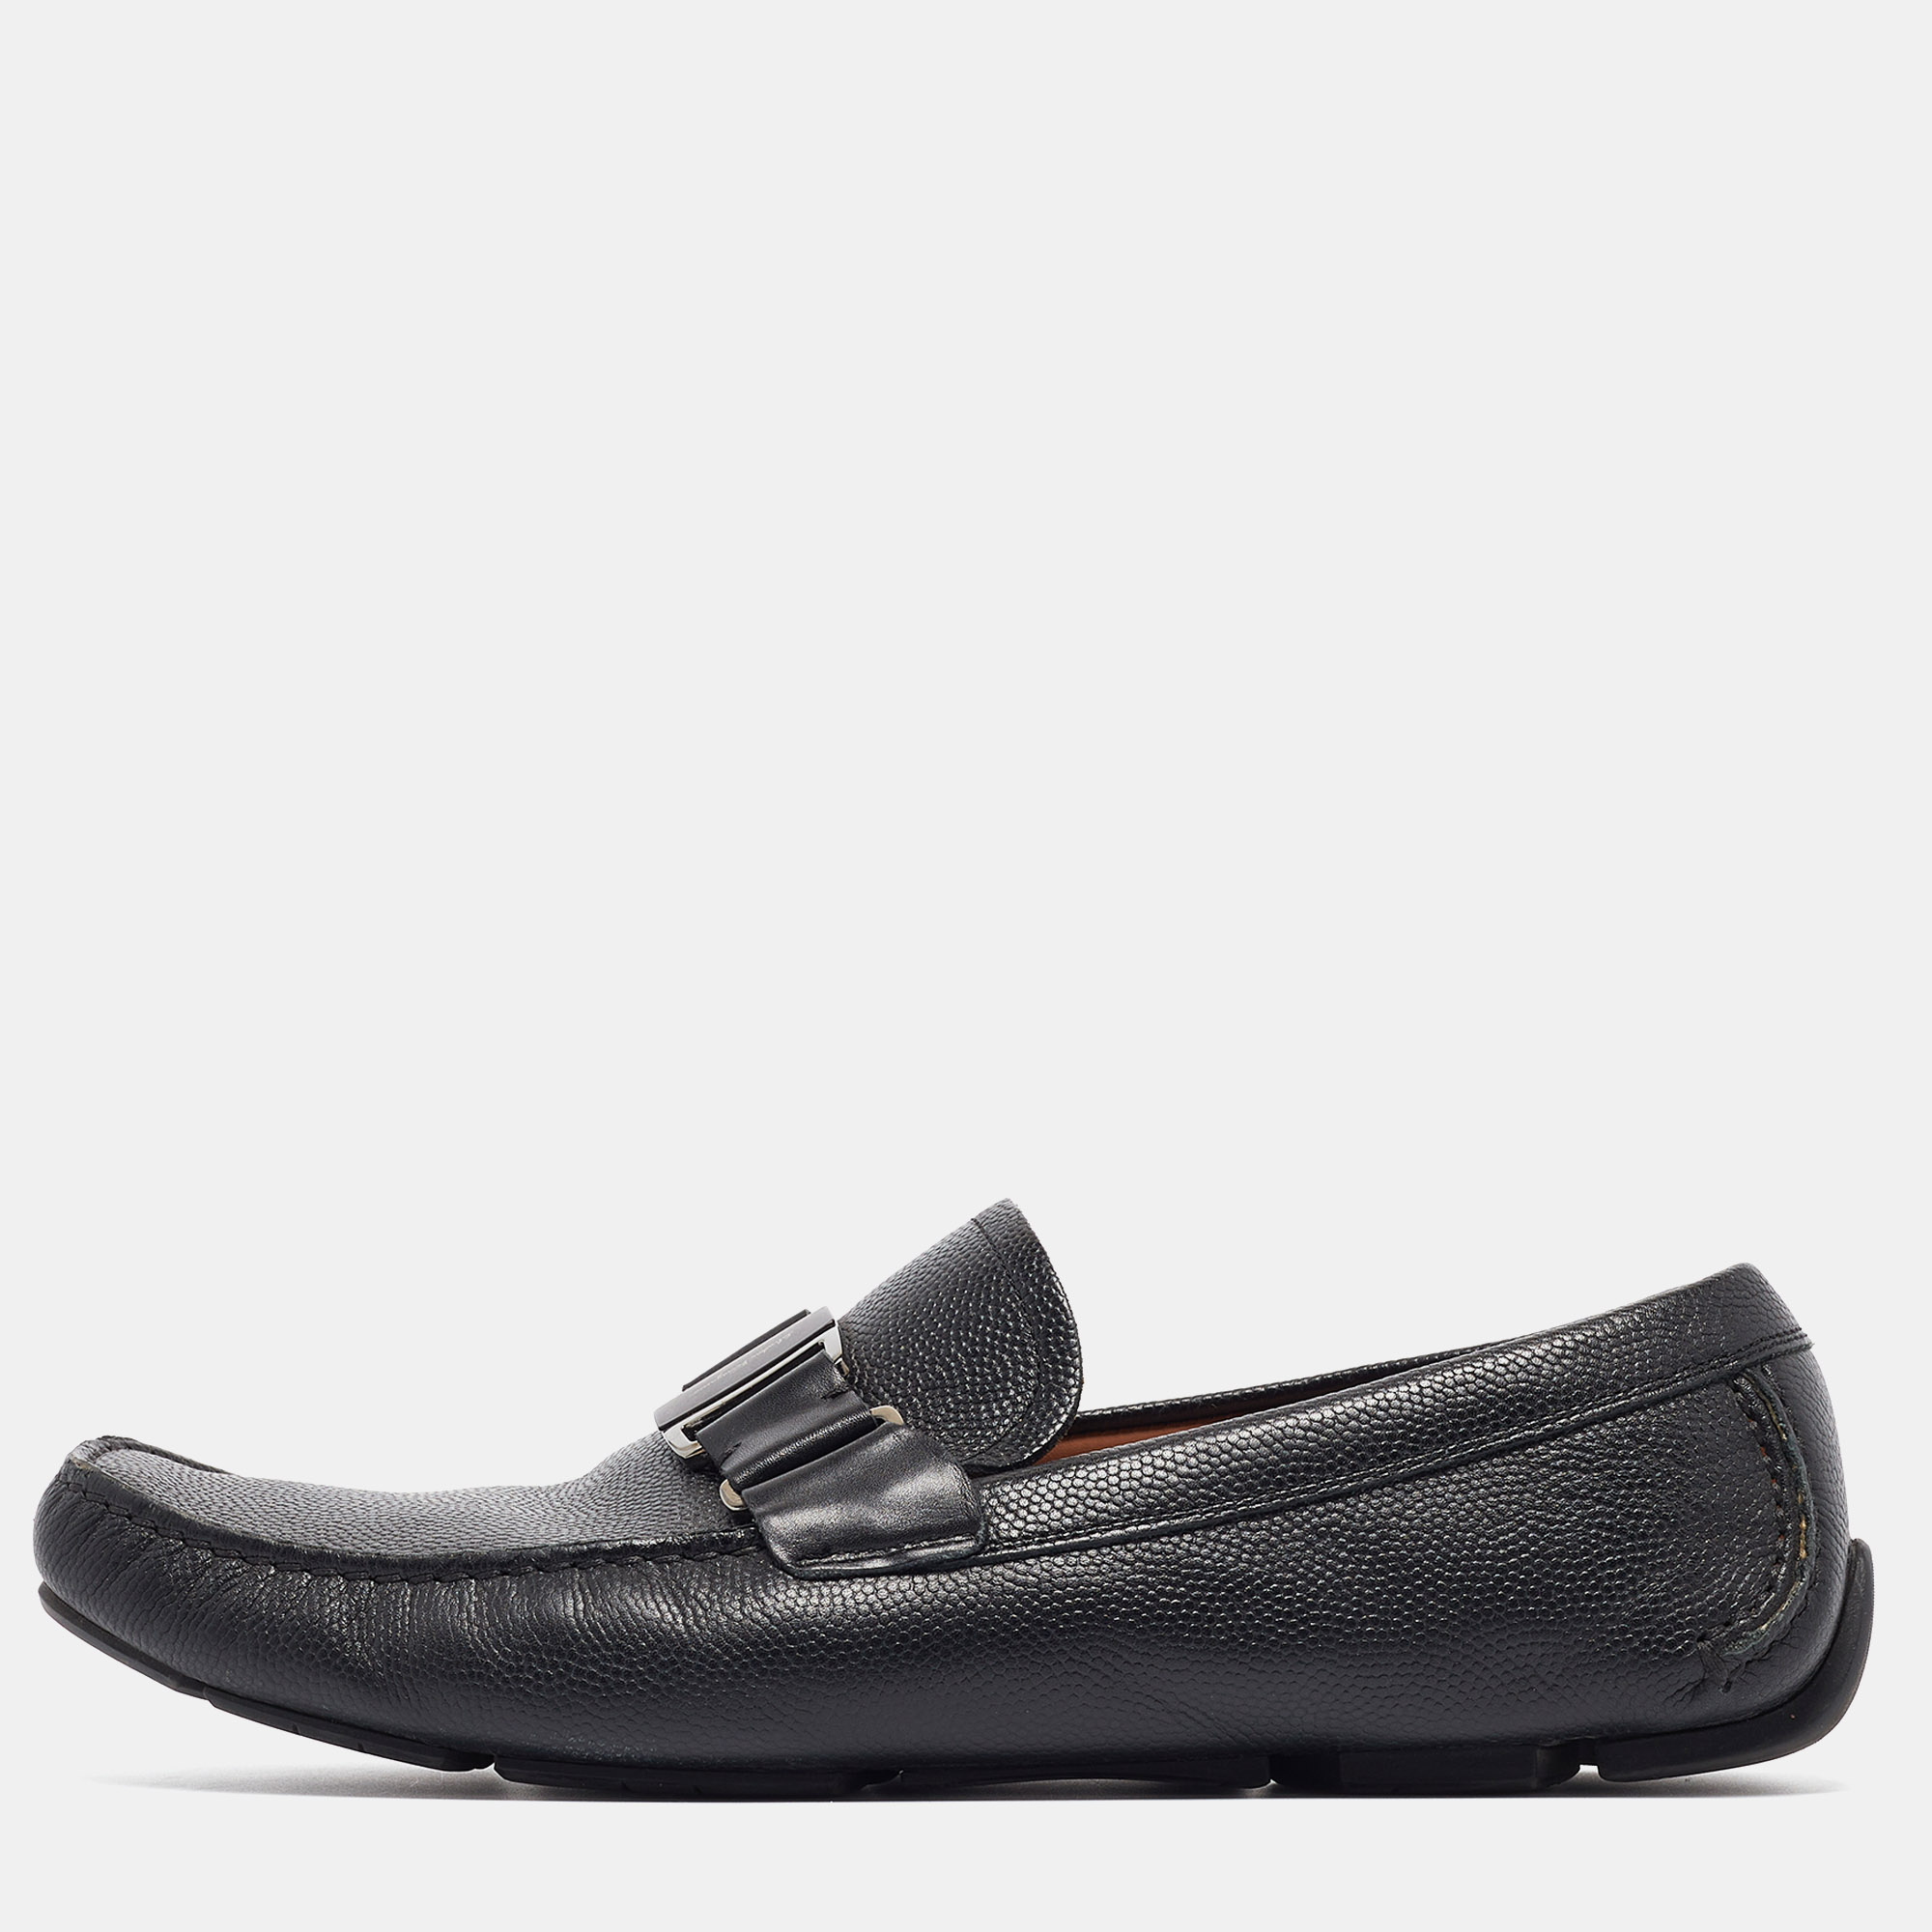 Salvatore ferragamo black leather buckle detail loafers size 43.5